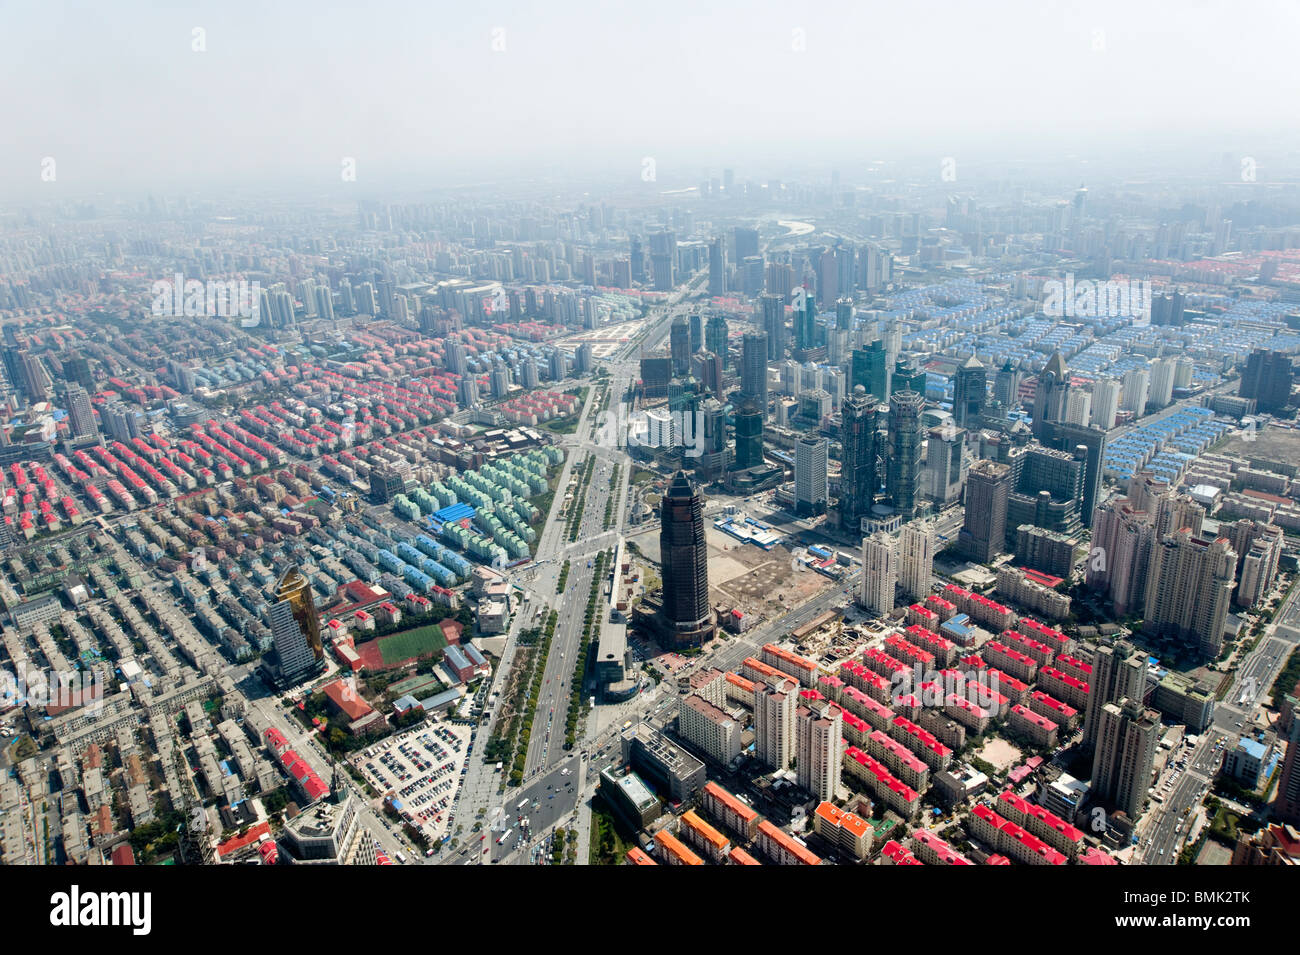 Smog and urban sprawl viewed from above, Shanghai, China Stock Photo